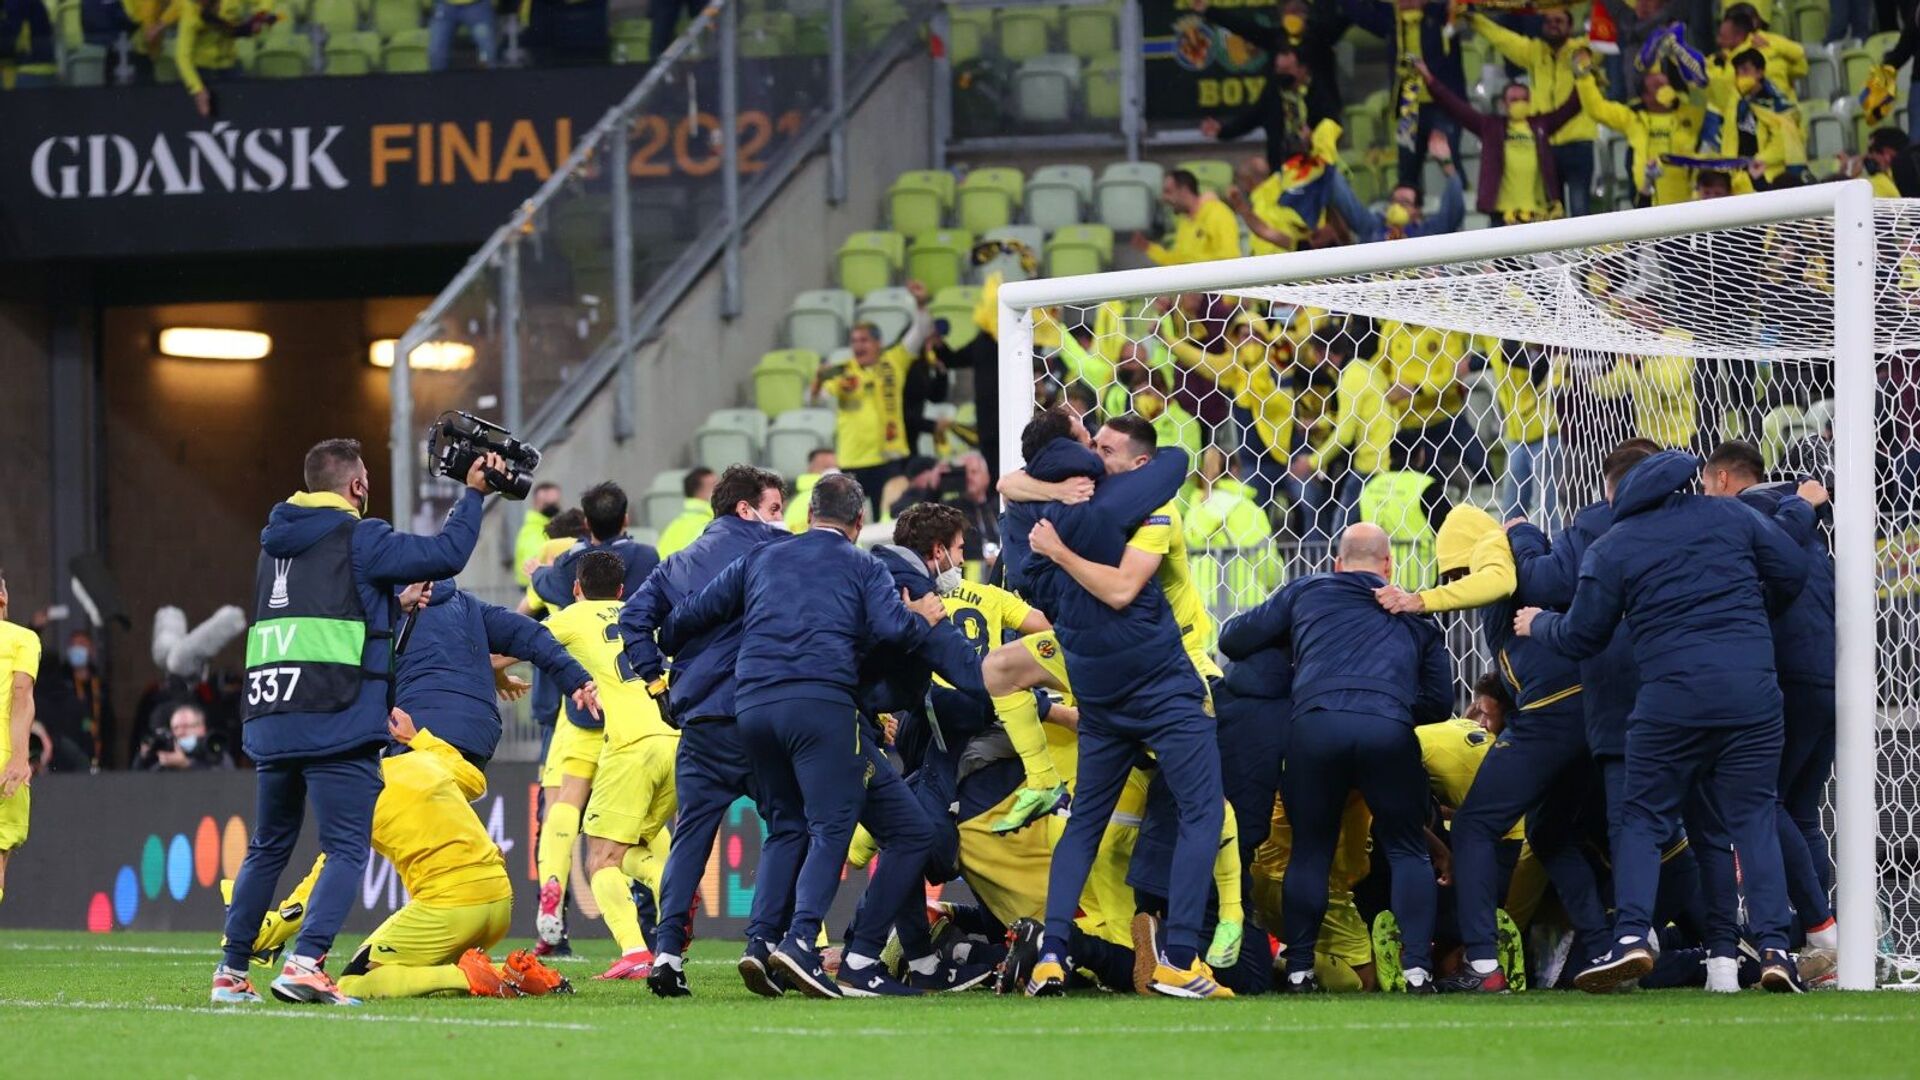 باشگاه ویارئال اسپانیا    The Spanish football club Villarreal has won the UEFA Europa League, beating  England's Manchester United in the penalty shootout. - اسپوتنیک افغانستان  , 1920, 27.05.2021